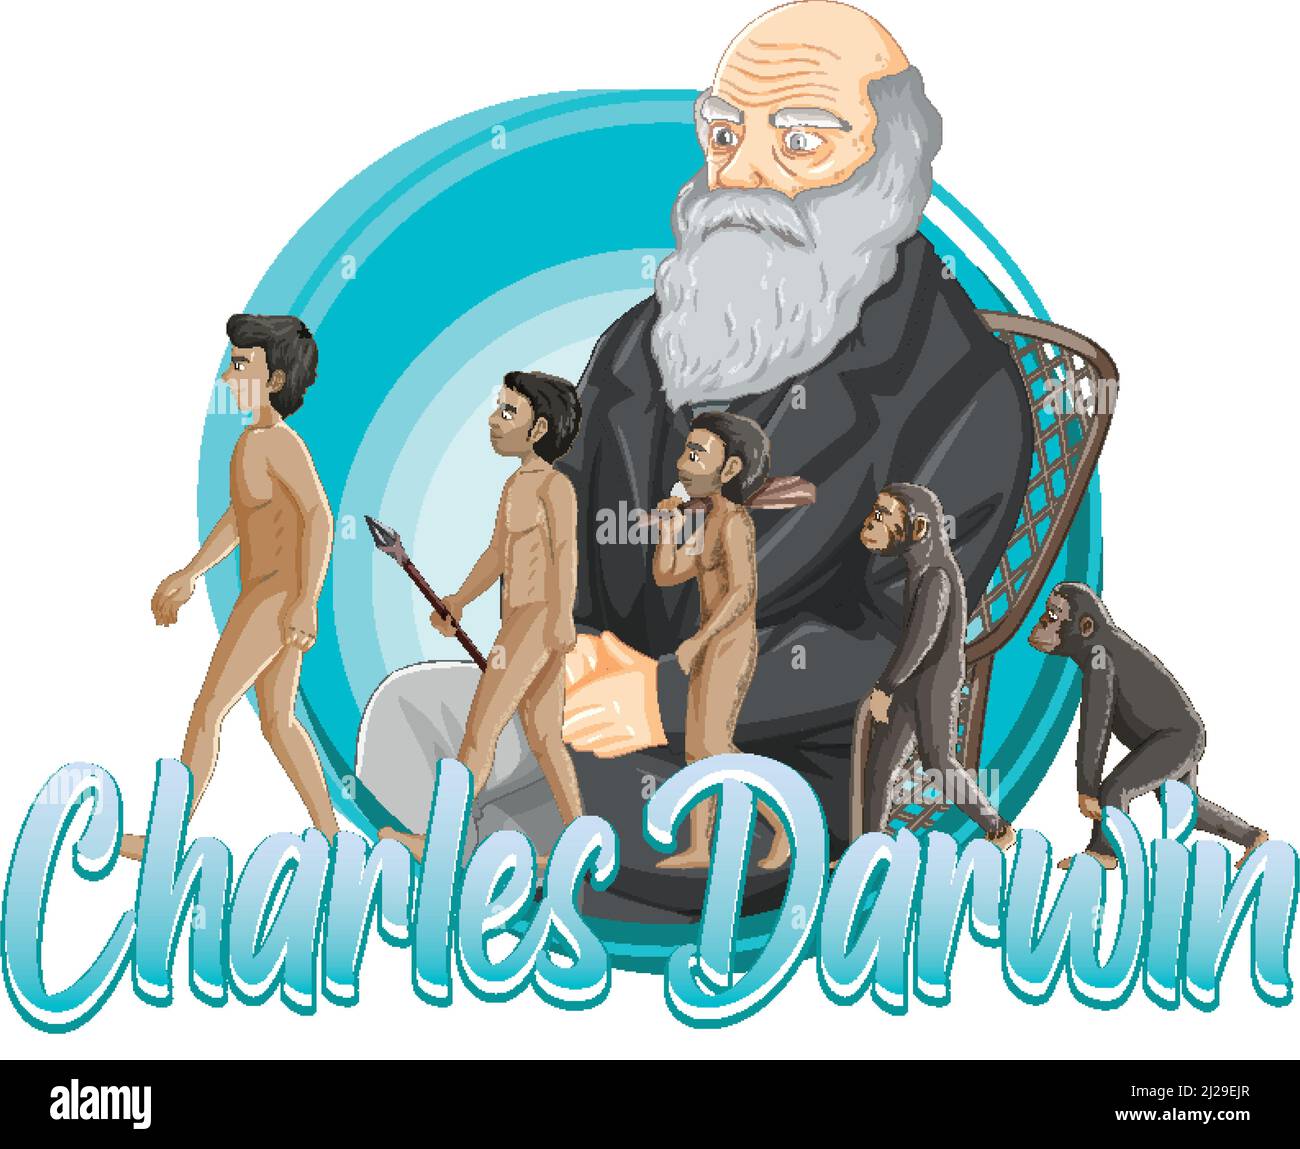 Porträt von Charles Darwin in Cartoon-Stil Illustration Stock Vektor